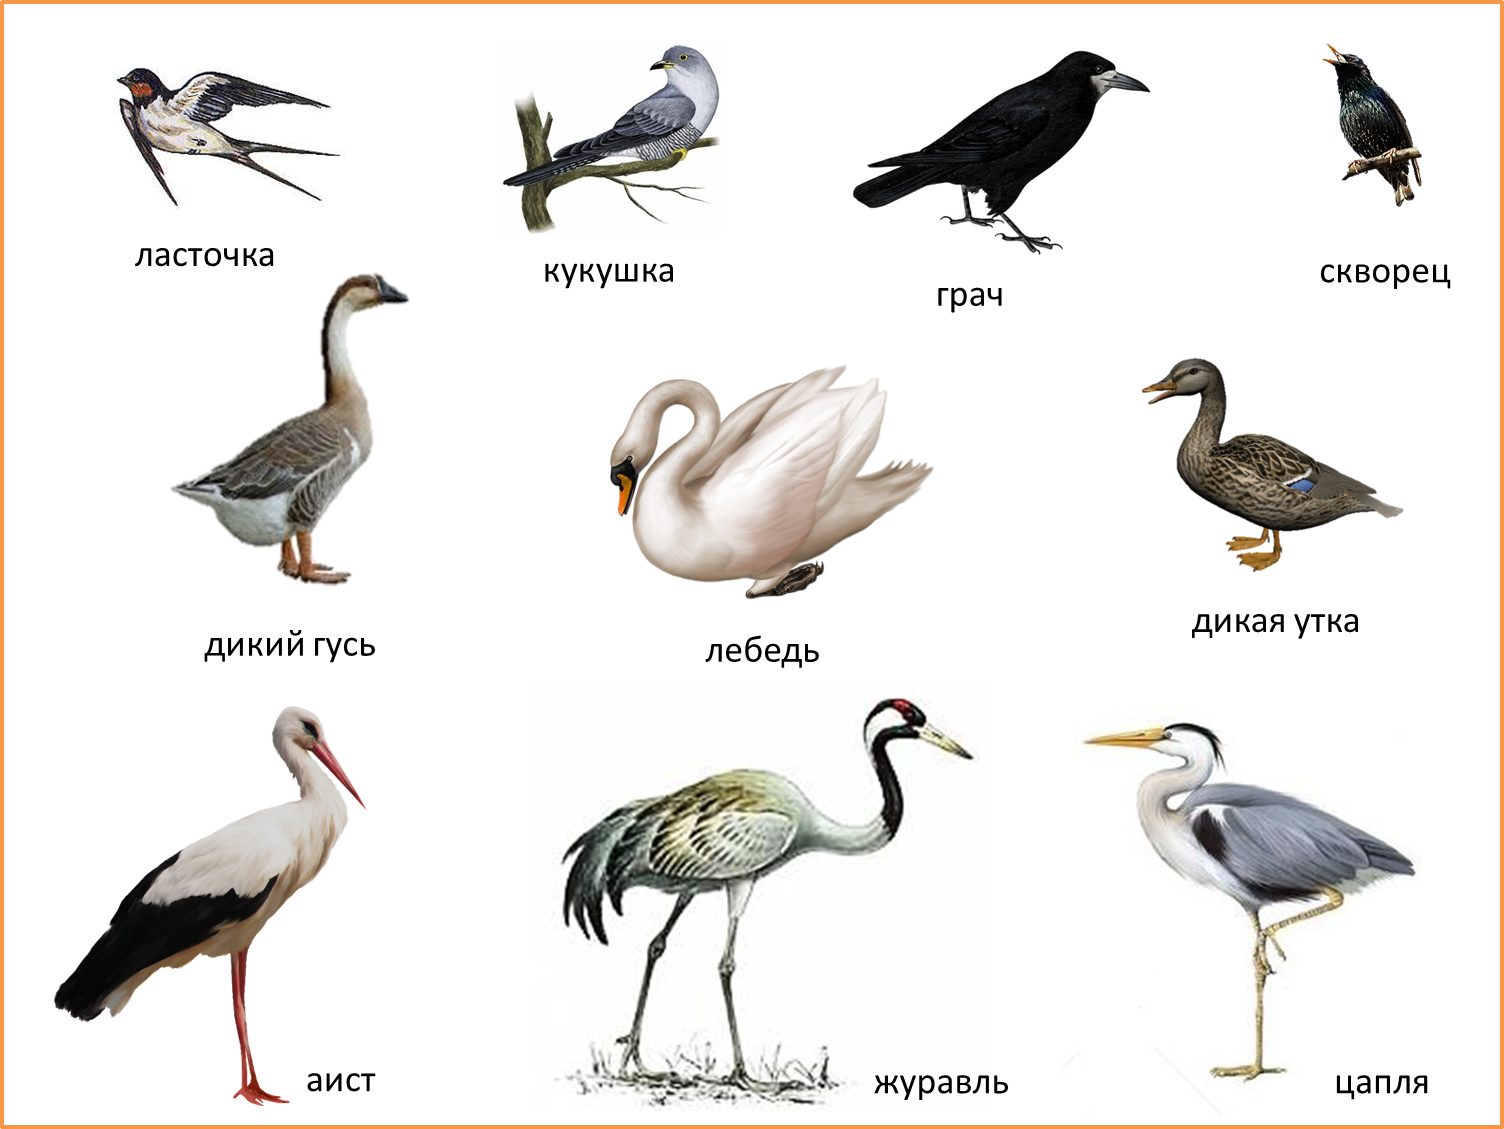 Фото перелетных птиц для детей. Перелетные птицы Кировской области. Перелетные птицы список для детей. Перелет птиц. Перелетные птицы карточки.